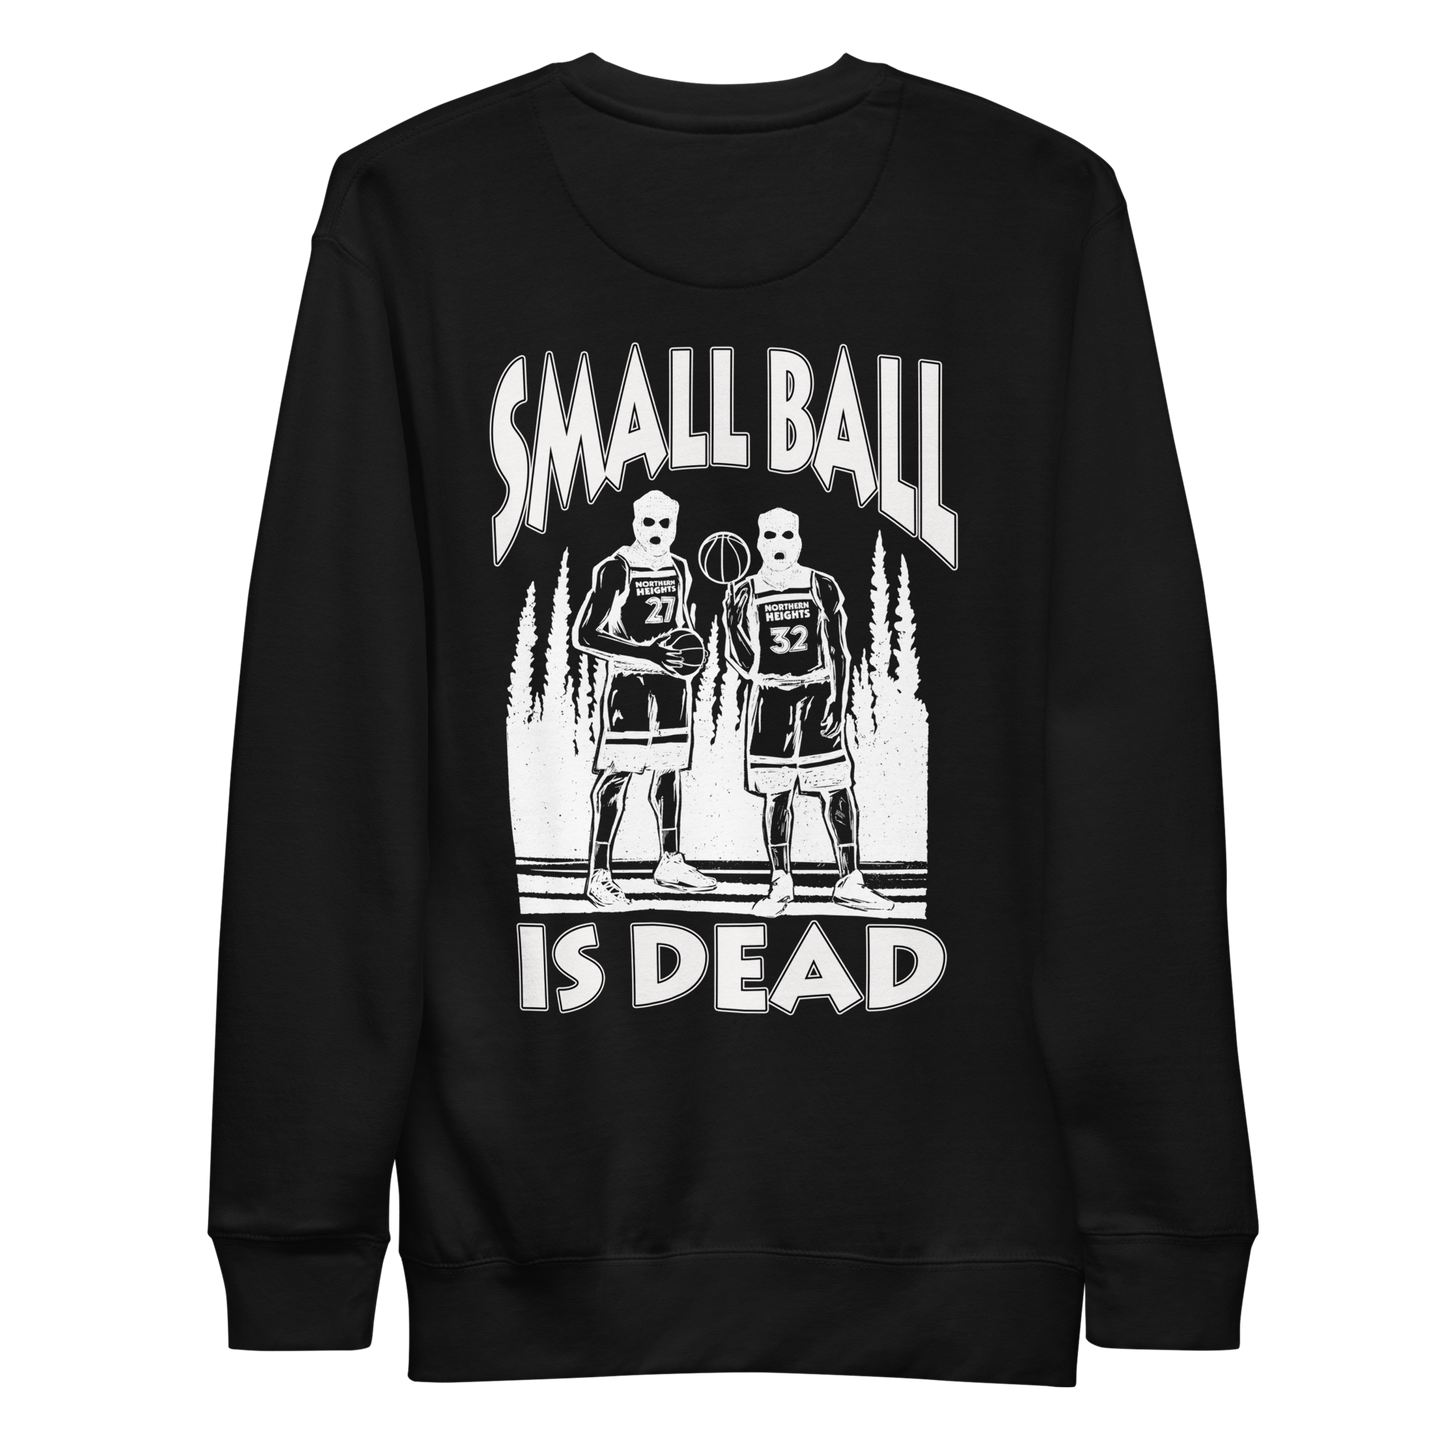 Small Ball is Dead Crewneck